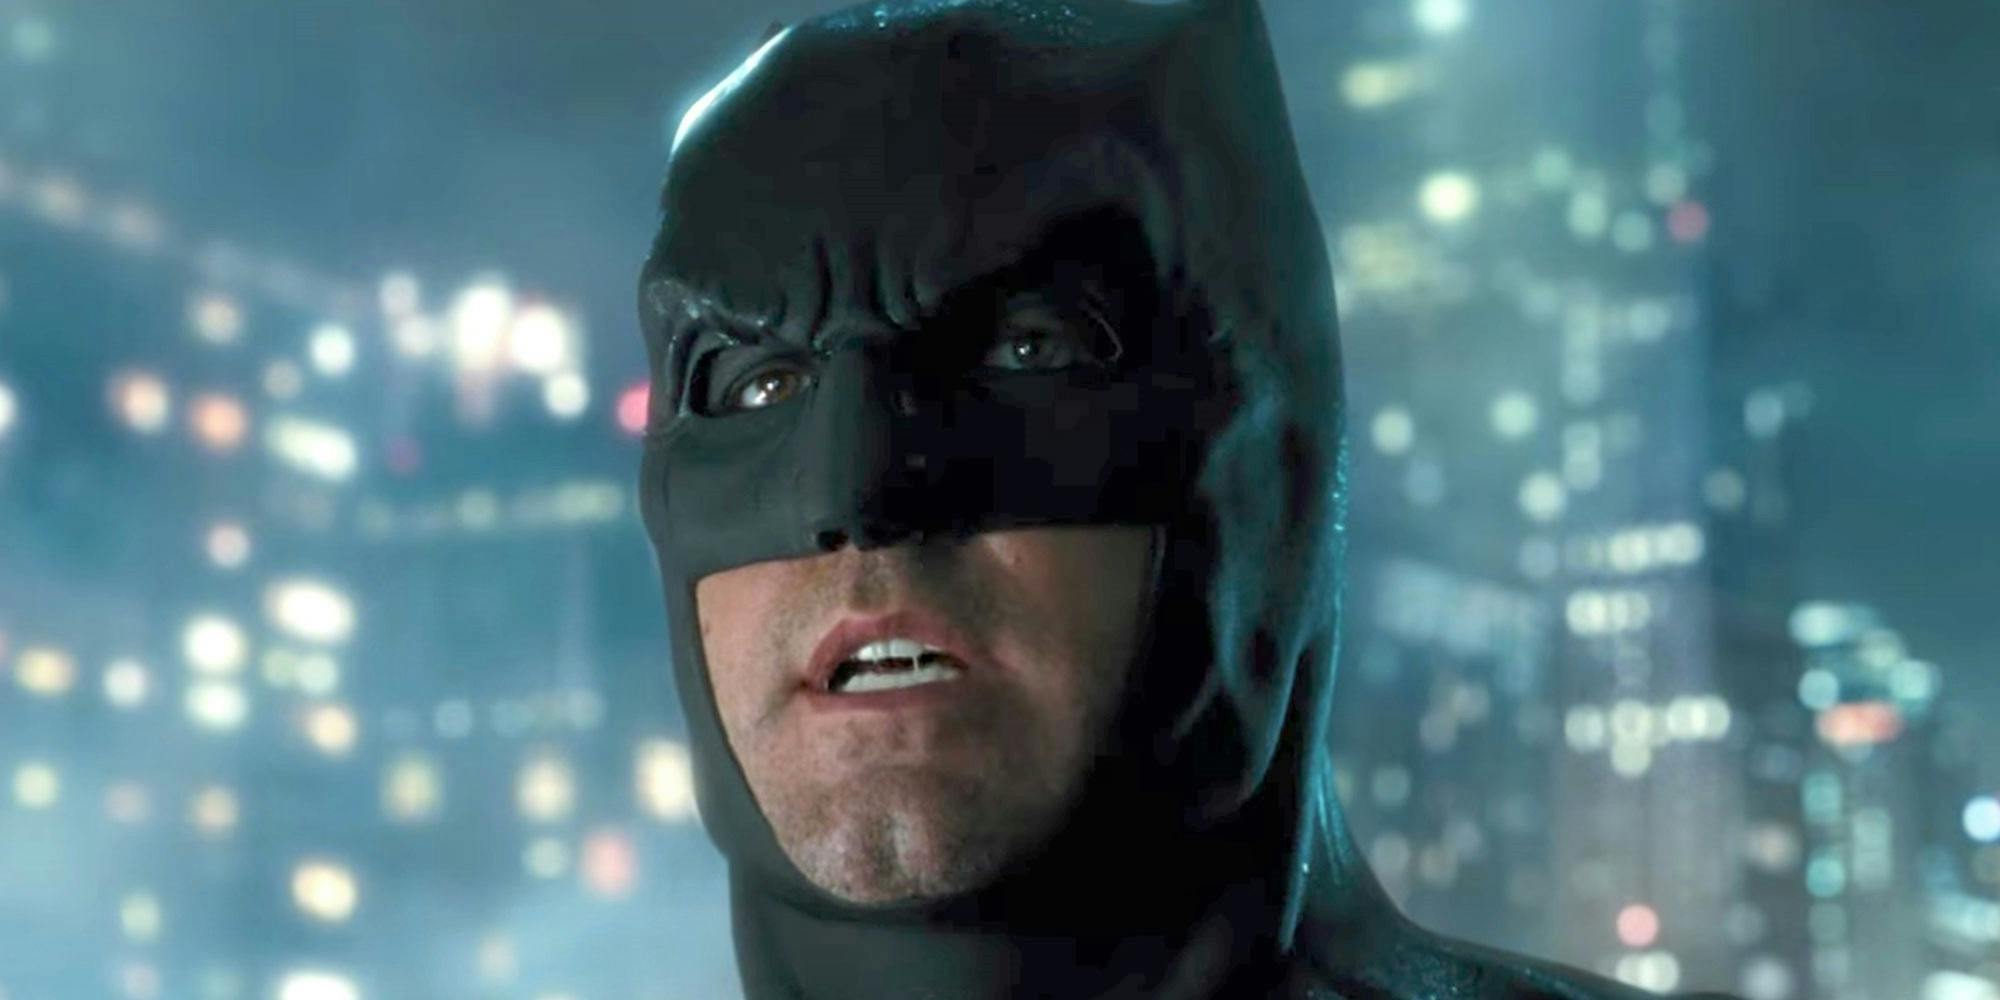 Why Does Batman Wear Eye Makeup?